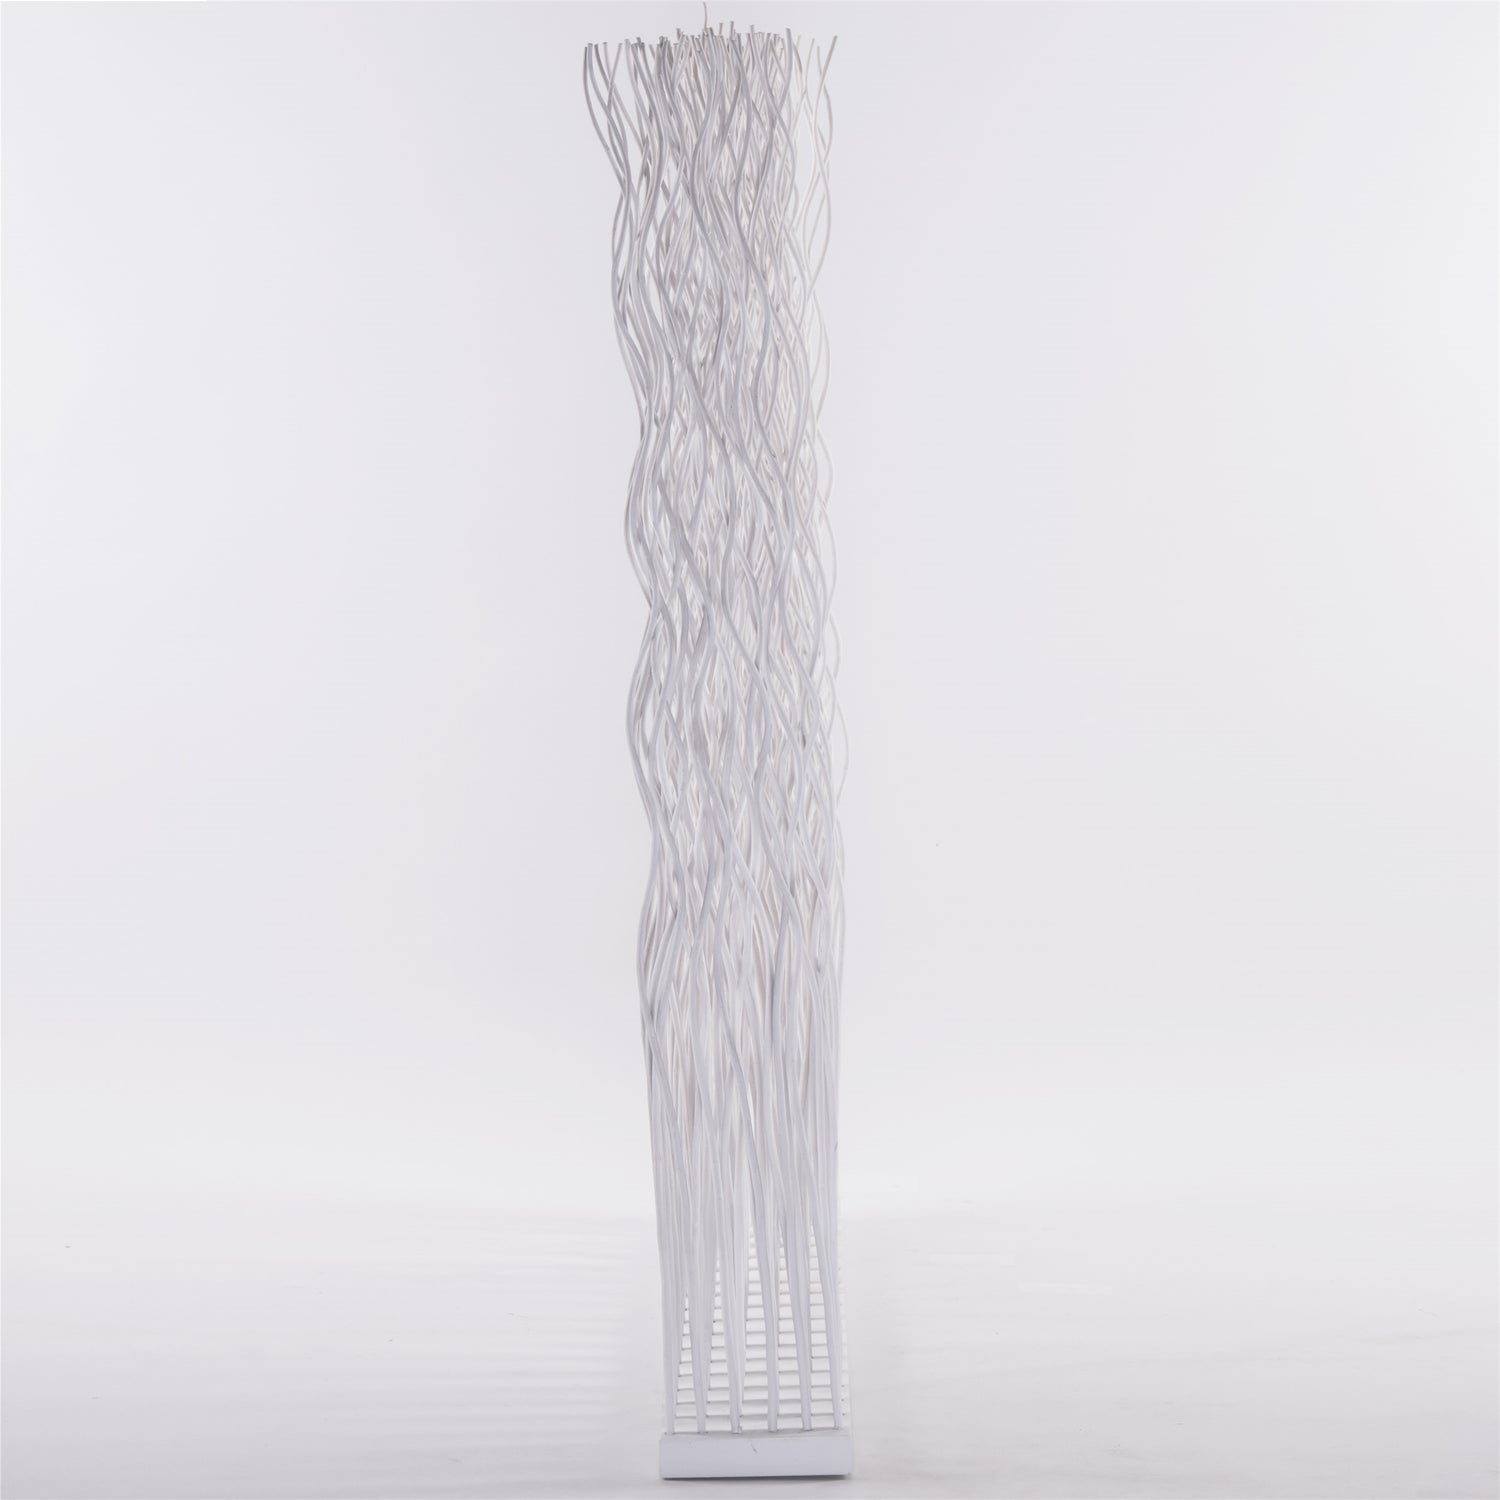 RAUMTEILER "KINKI" | Weidenholz, 130x80 cm | Zweige Paravent